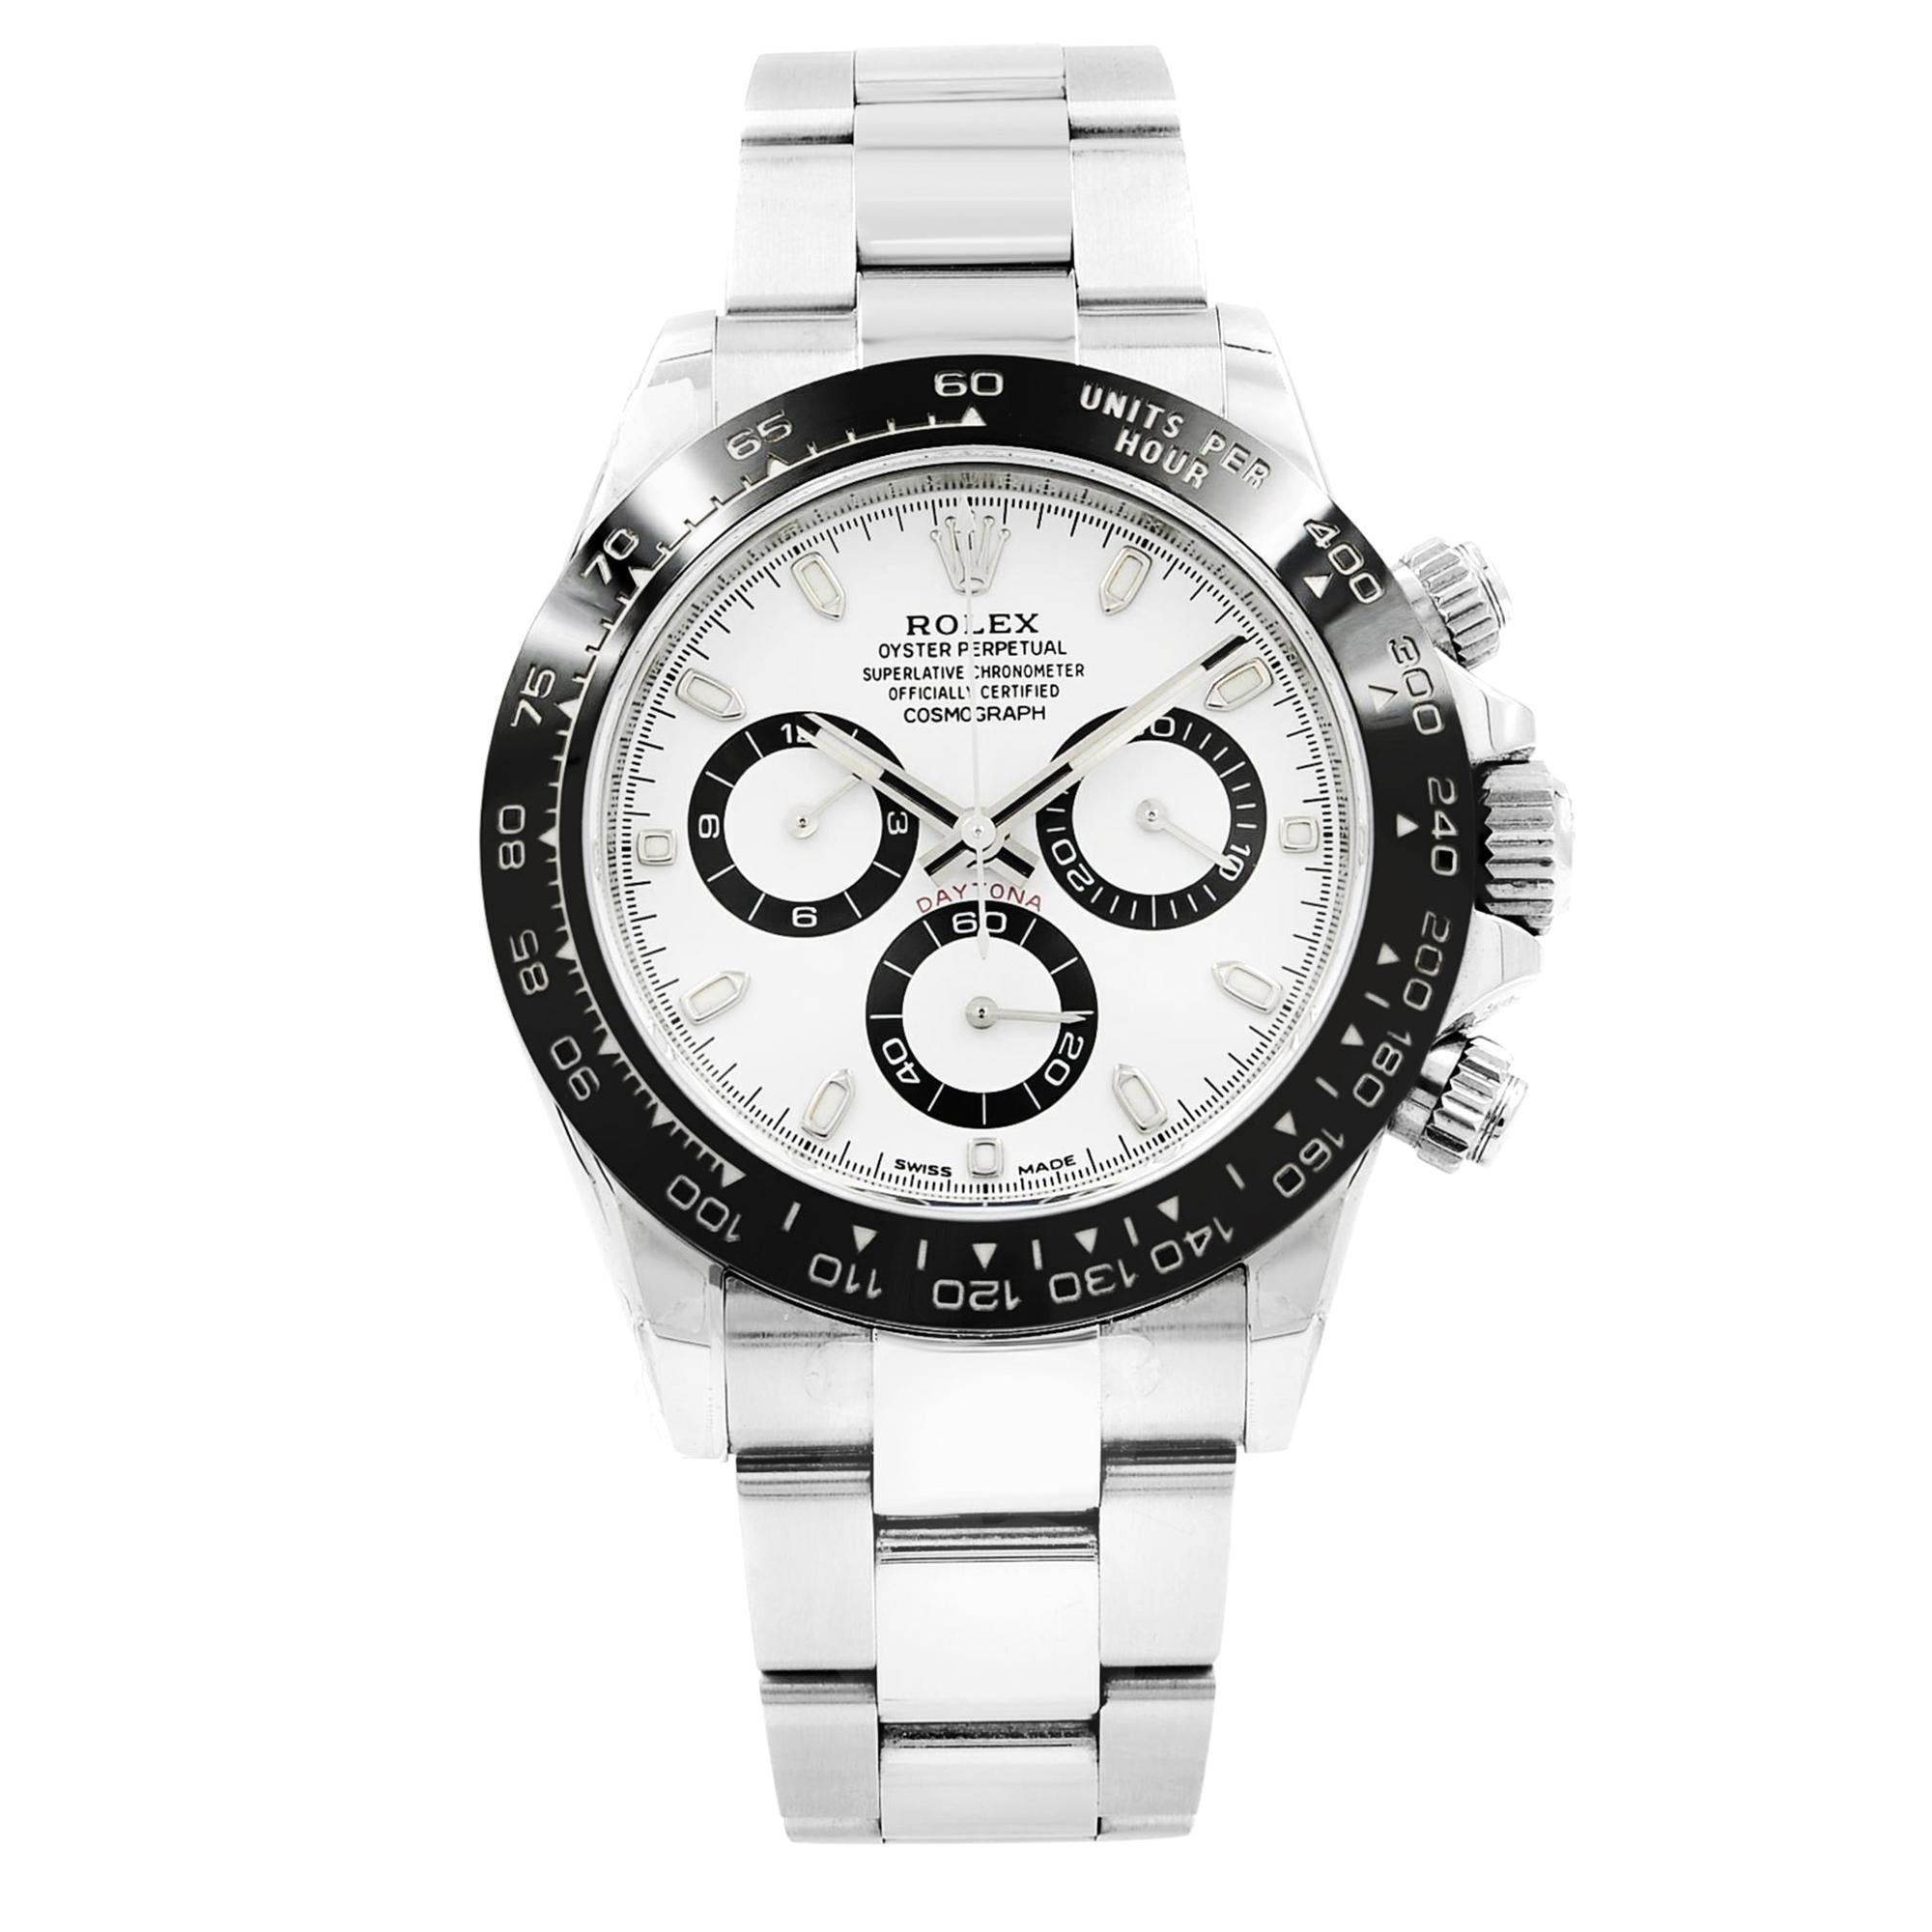 Rolex Daytona White Panda Dial Steel Ceramic Automatic Men’s Watch 116500LN w